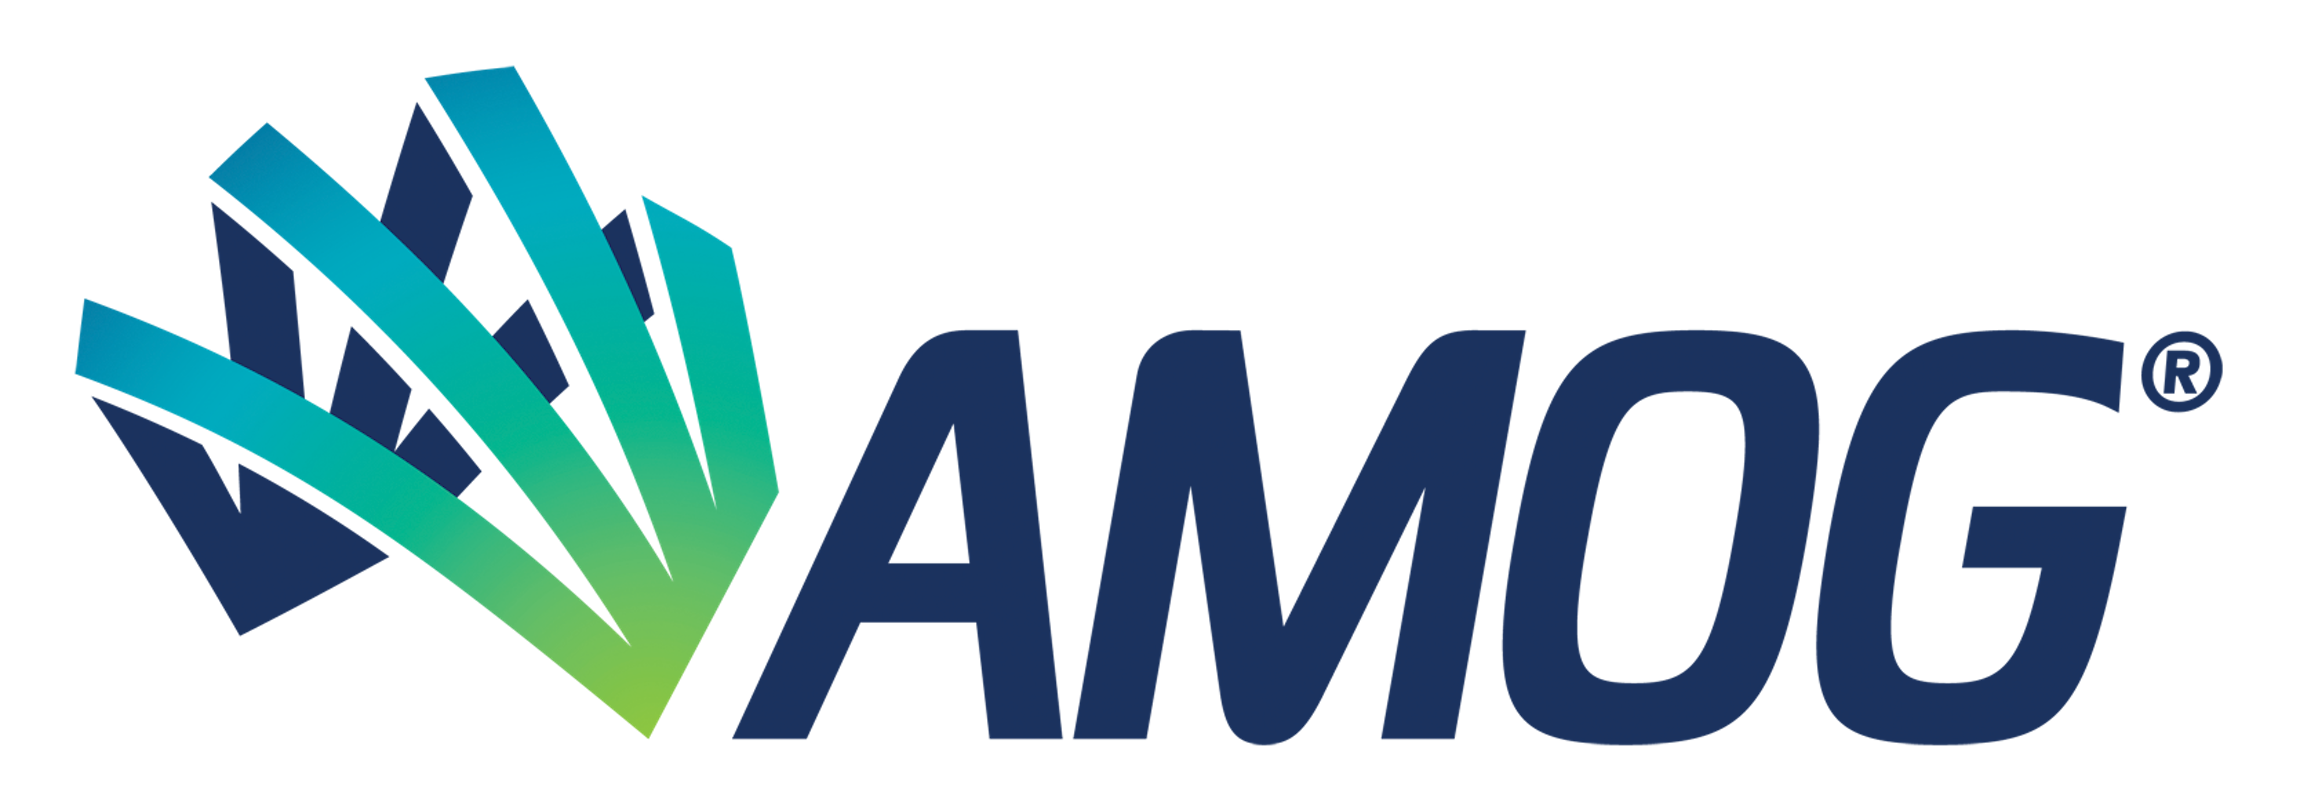 AMOG Consulting Logo